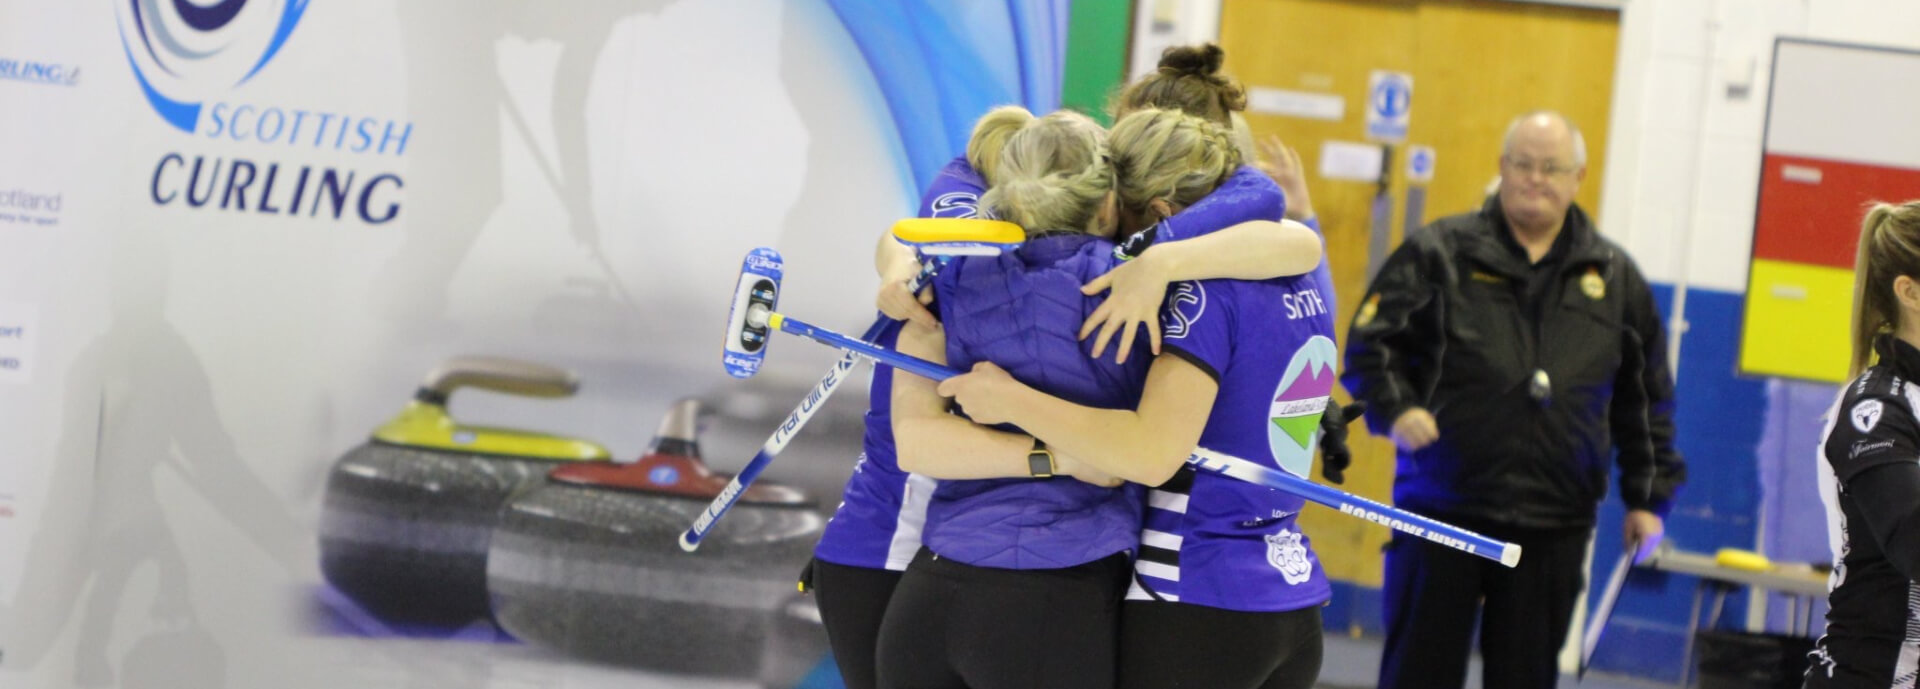 Team Jackson celebrating women's Scottish Curling Championship victory